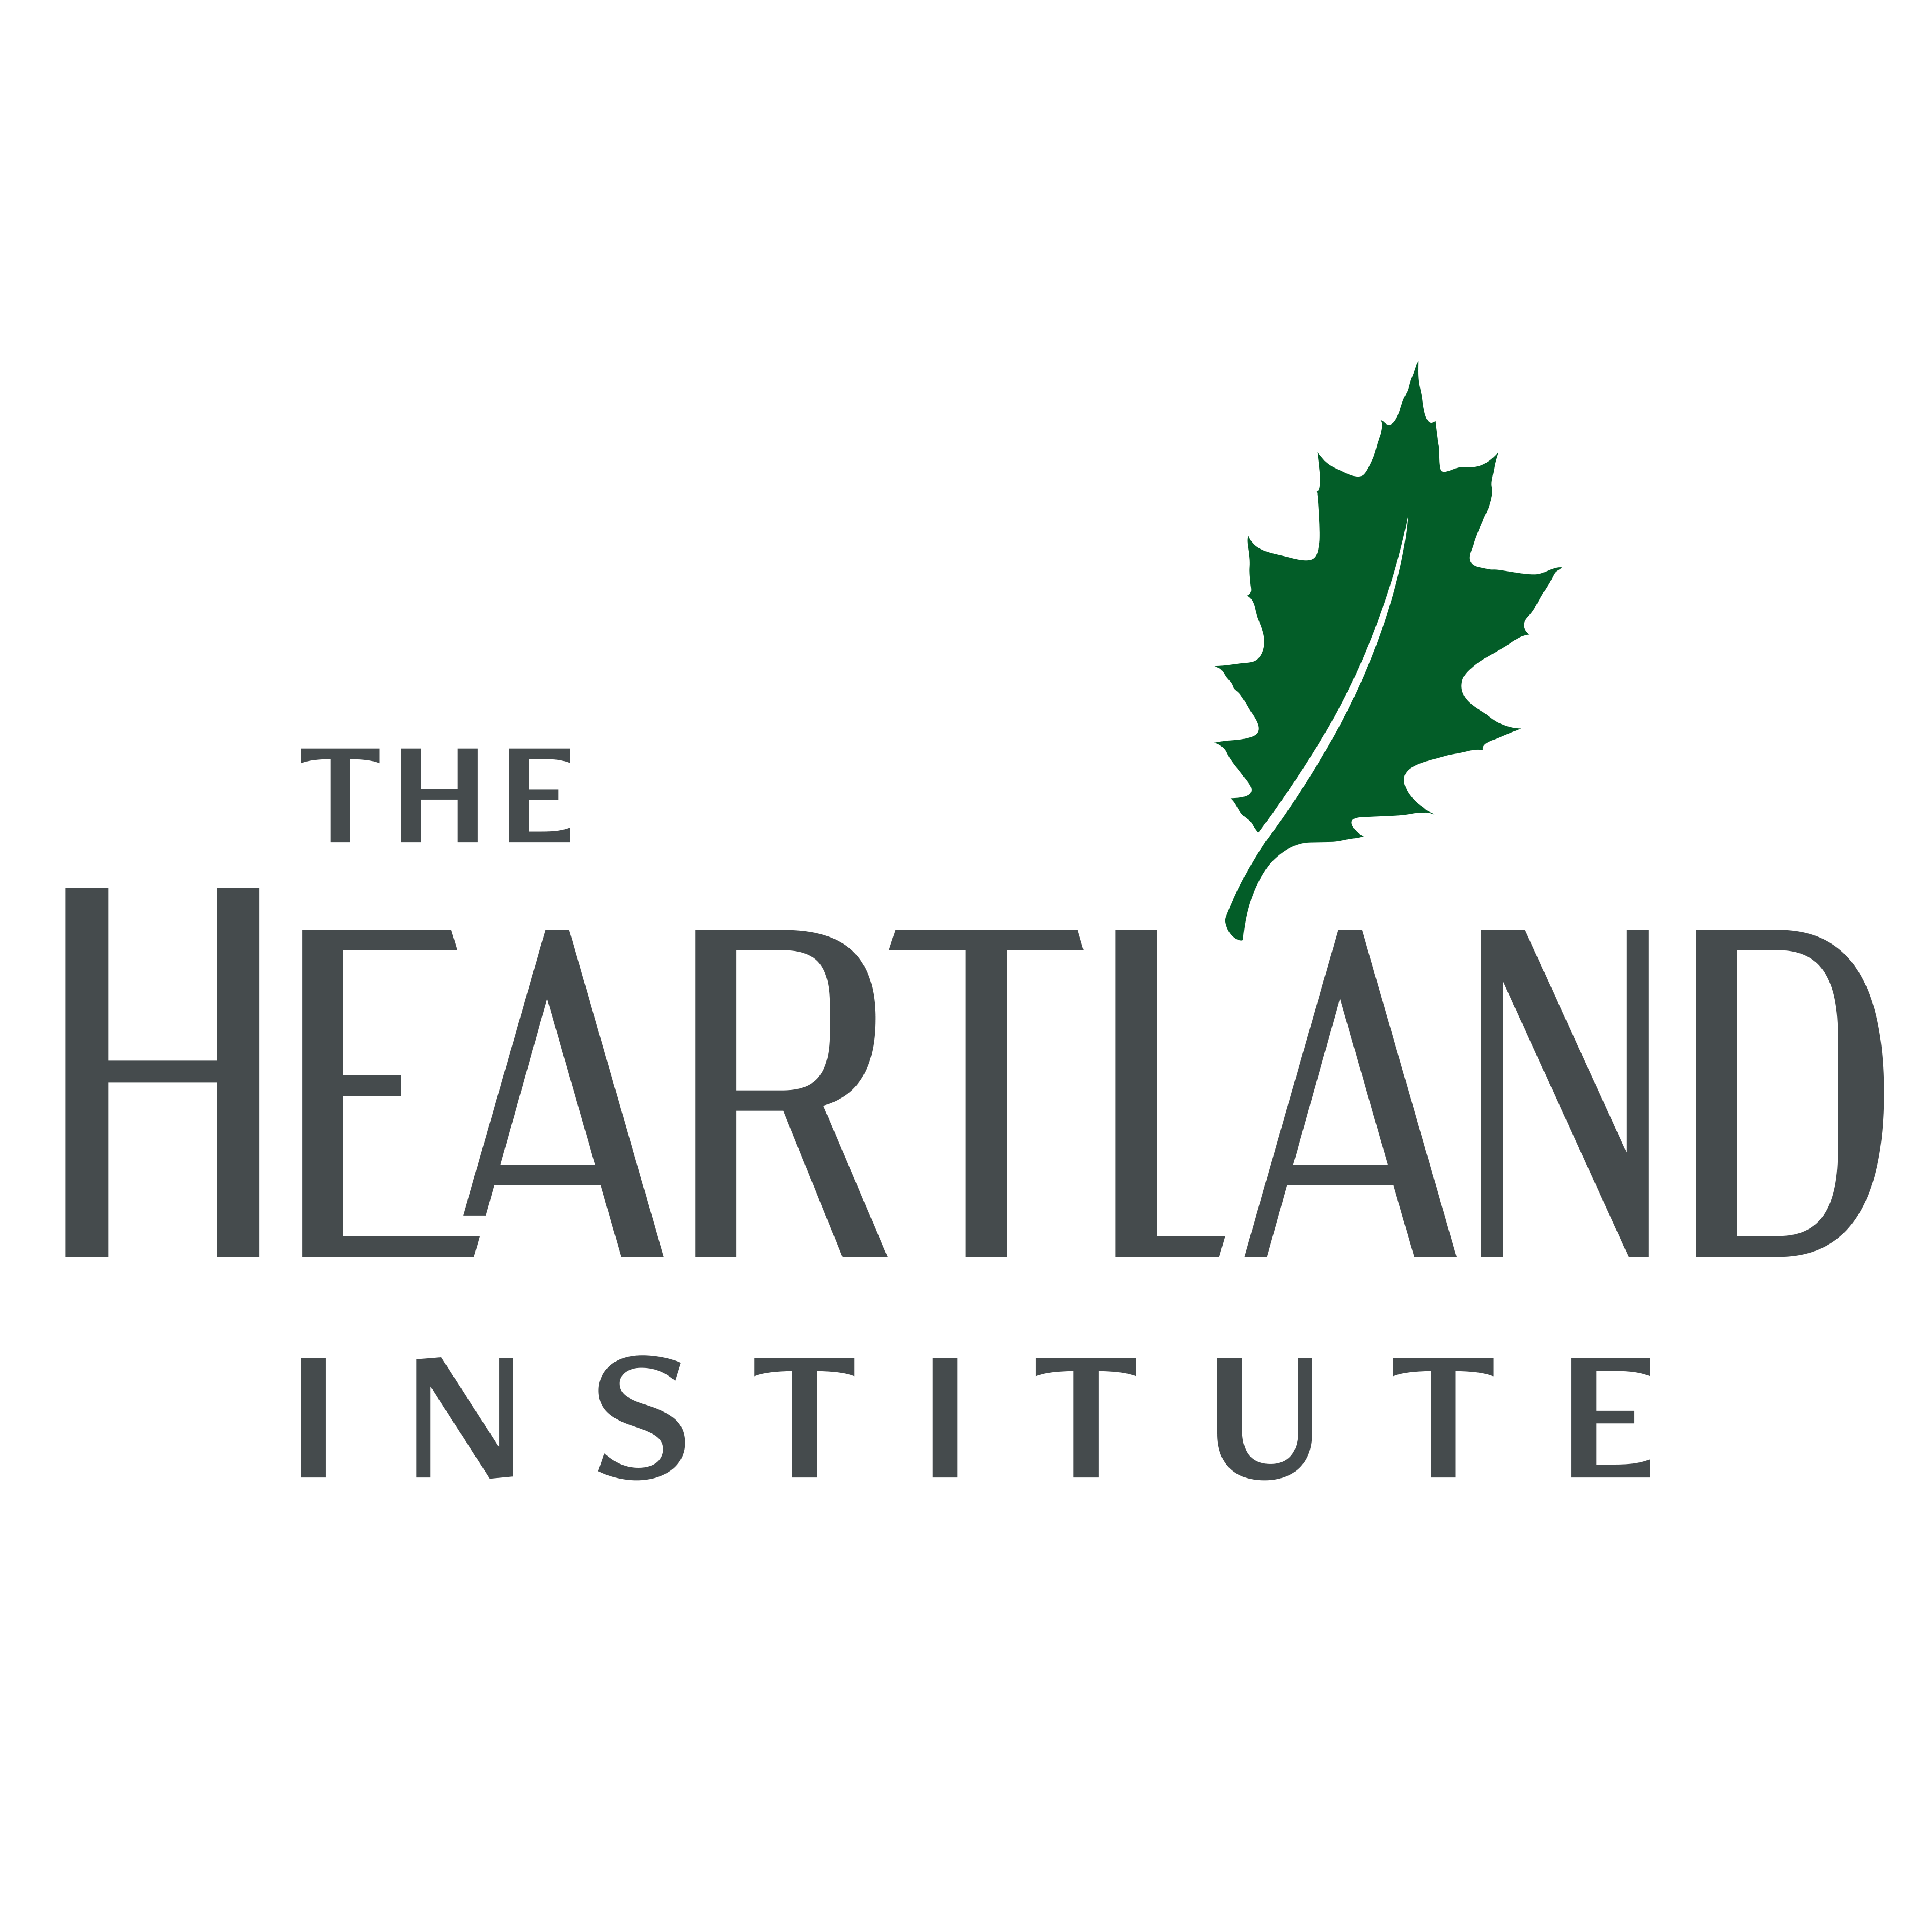 The Heartland Institute logo